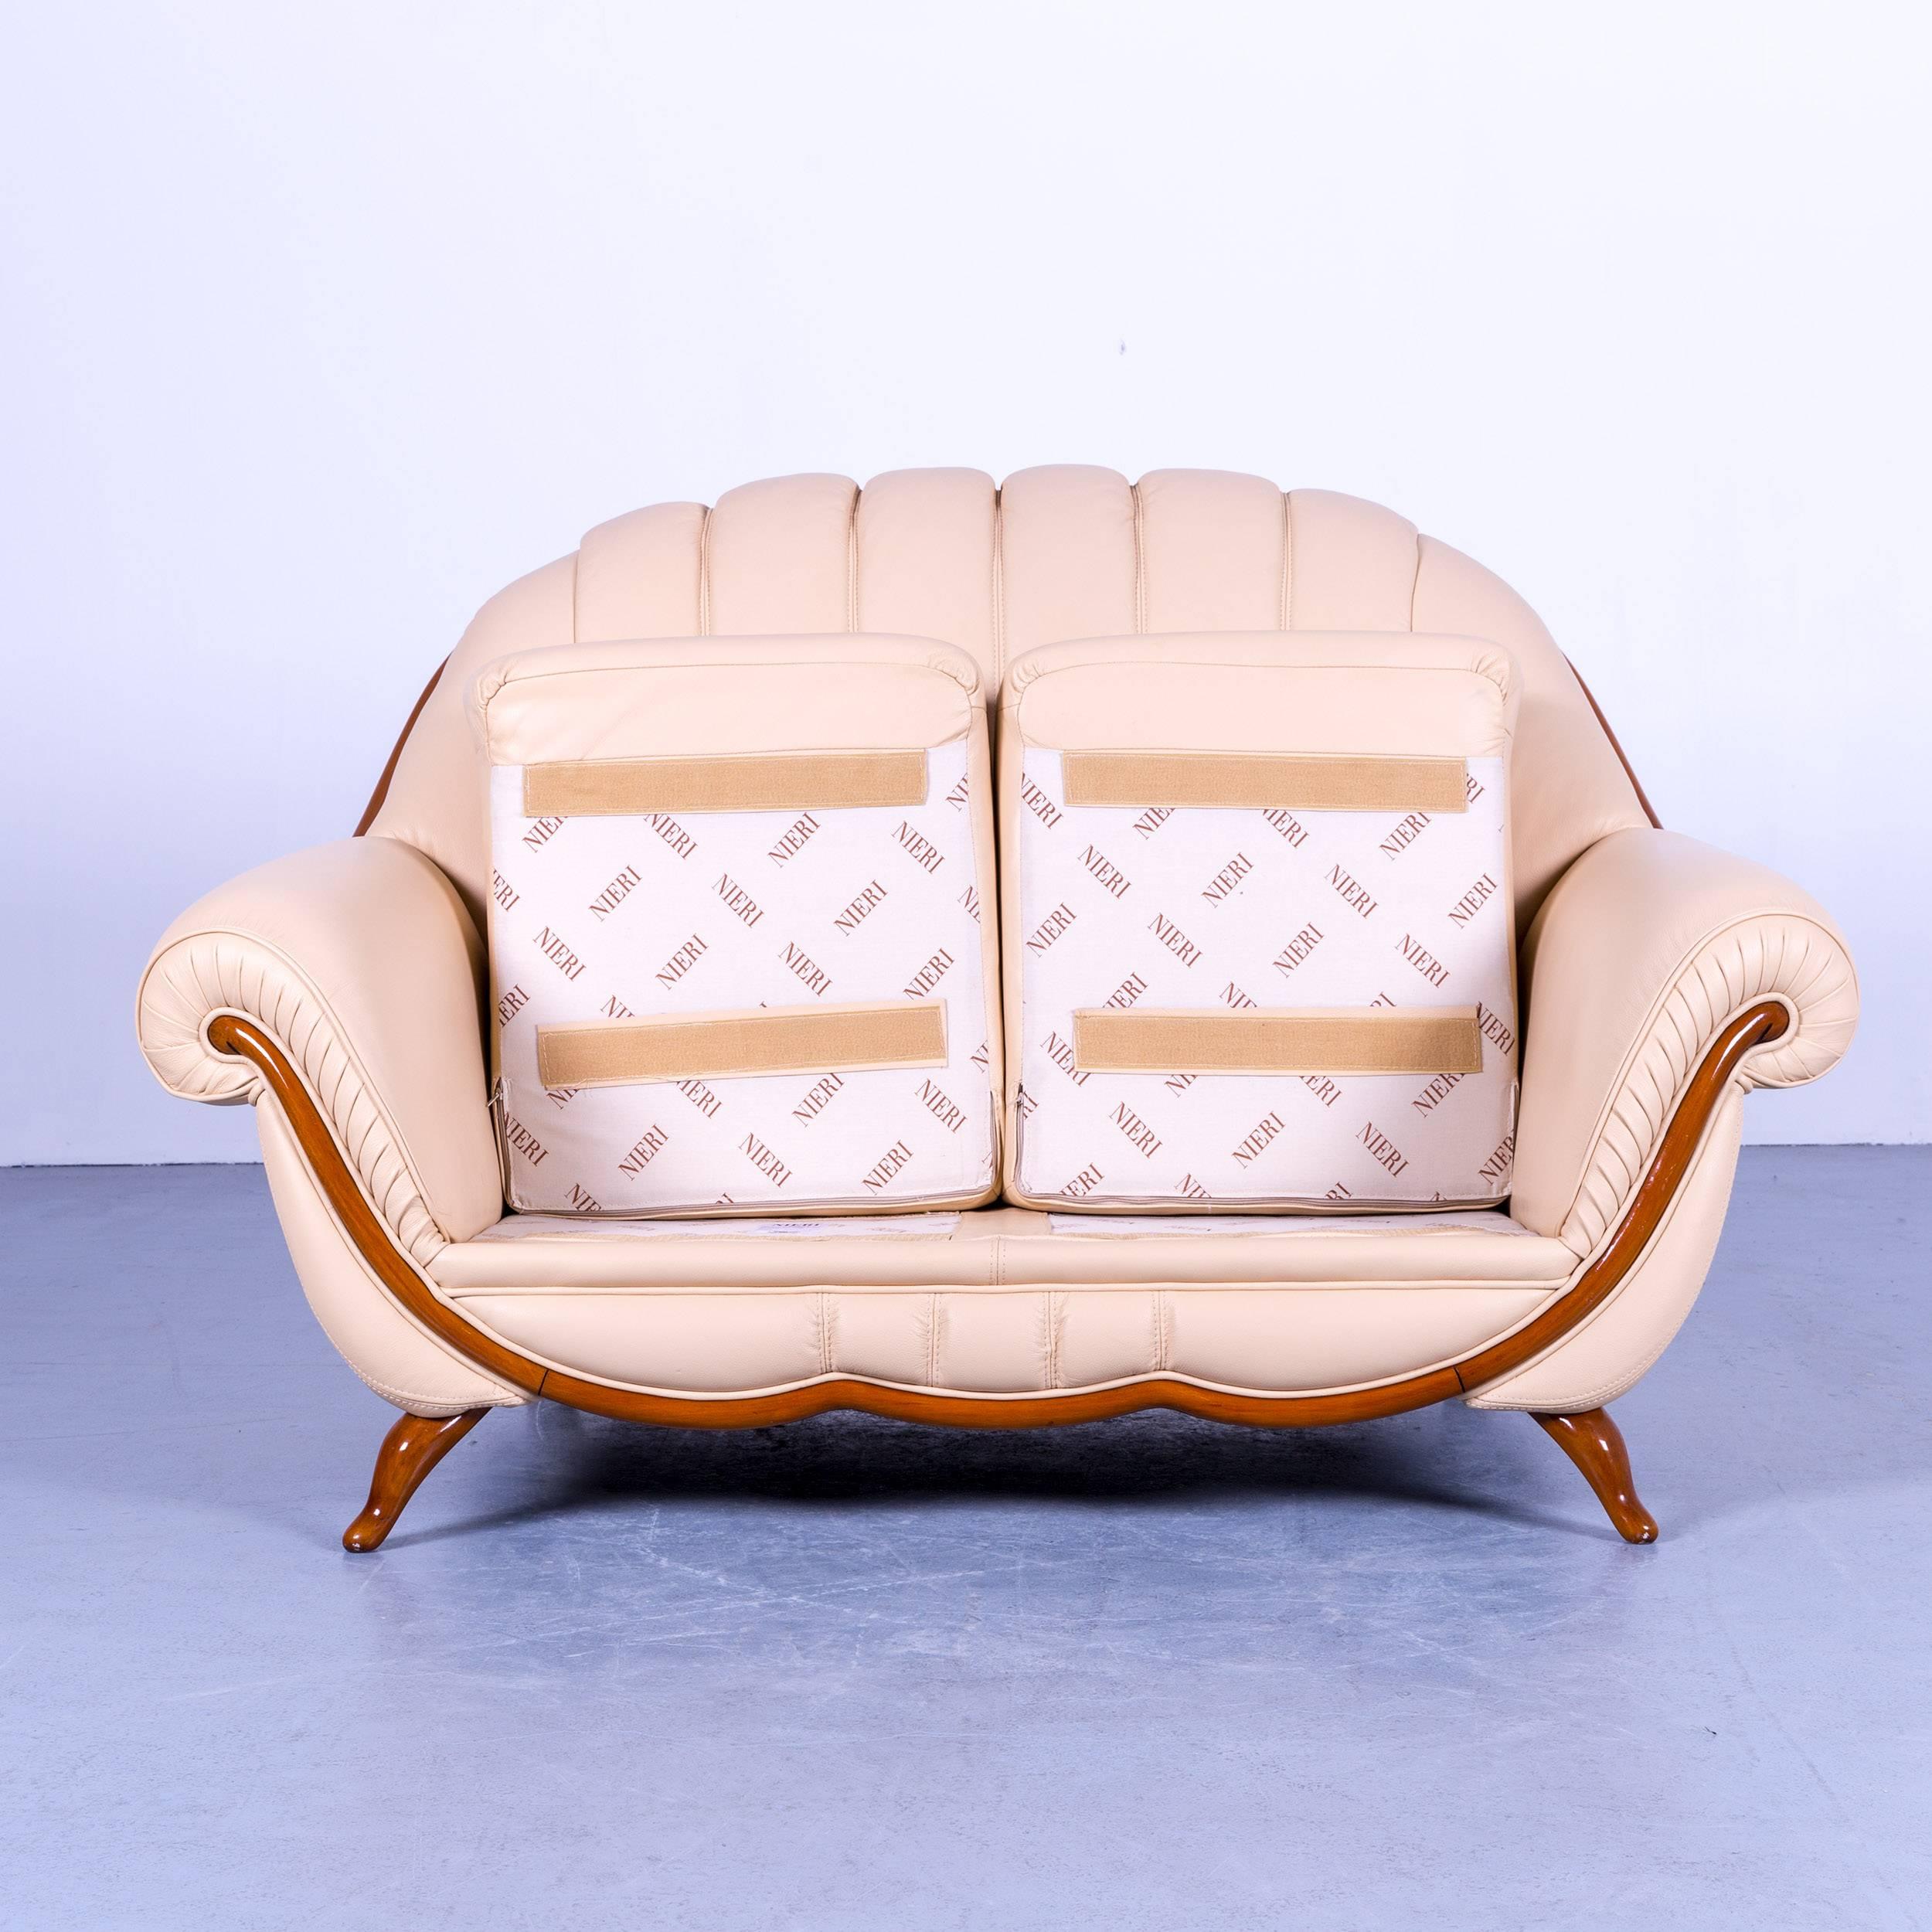 Nieri Designer Sofa Crème Beige Leather Two-Seat Couch Wood 5